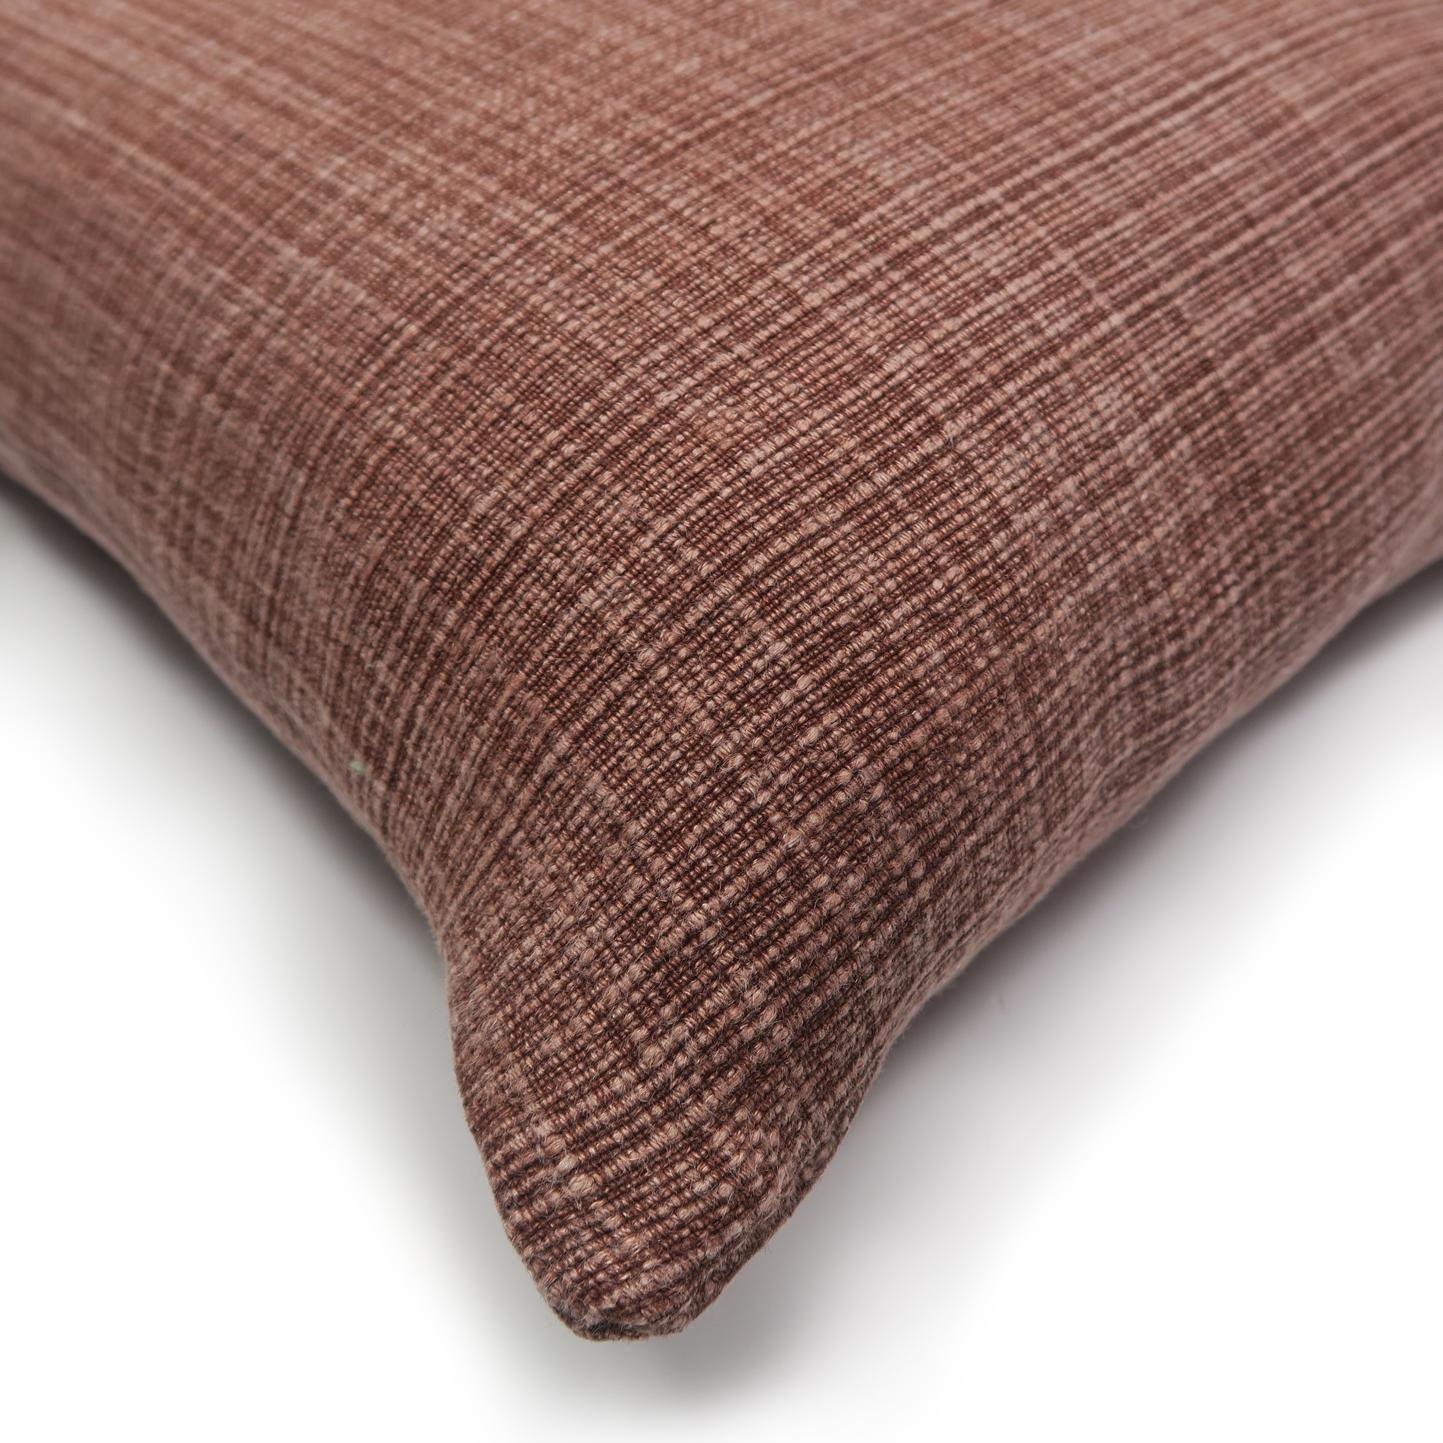 Belgian Cushion / Pillow Bonzai Roze by Evolution21 For Sale